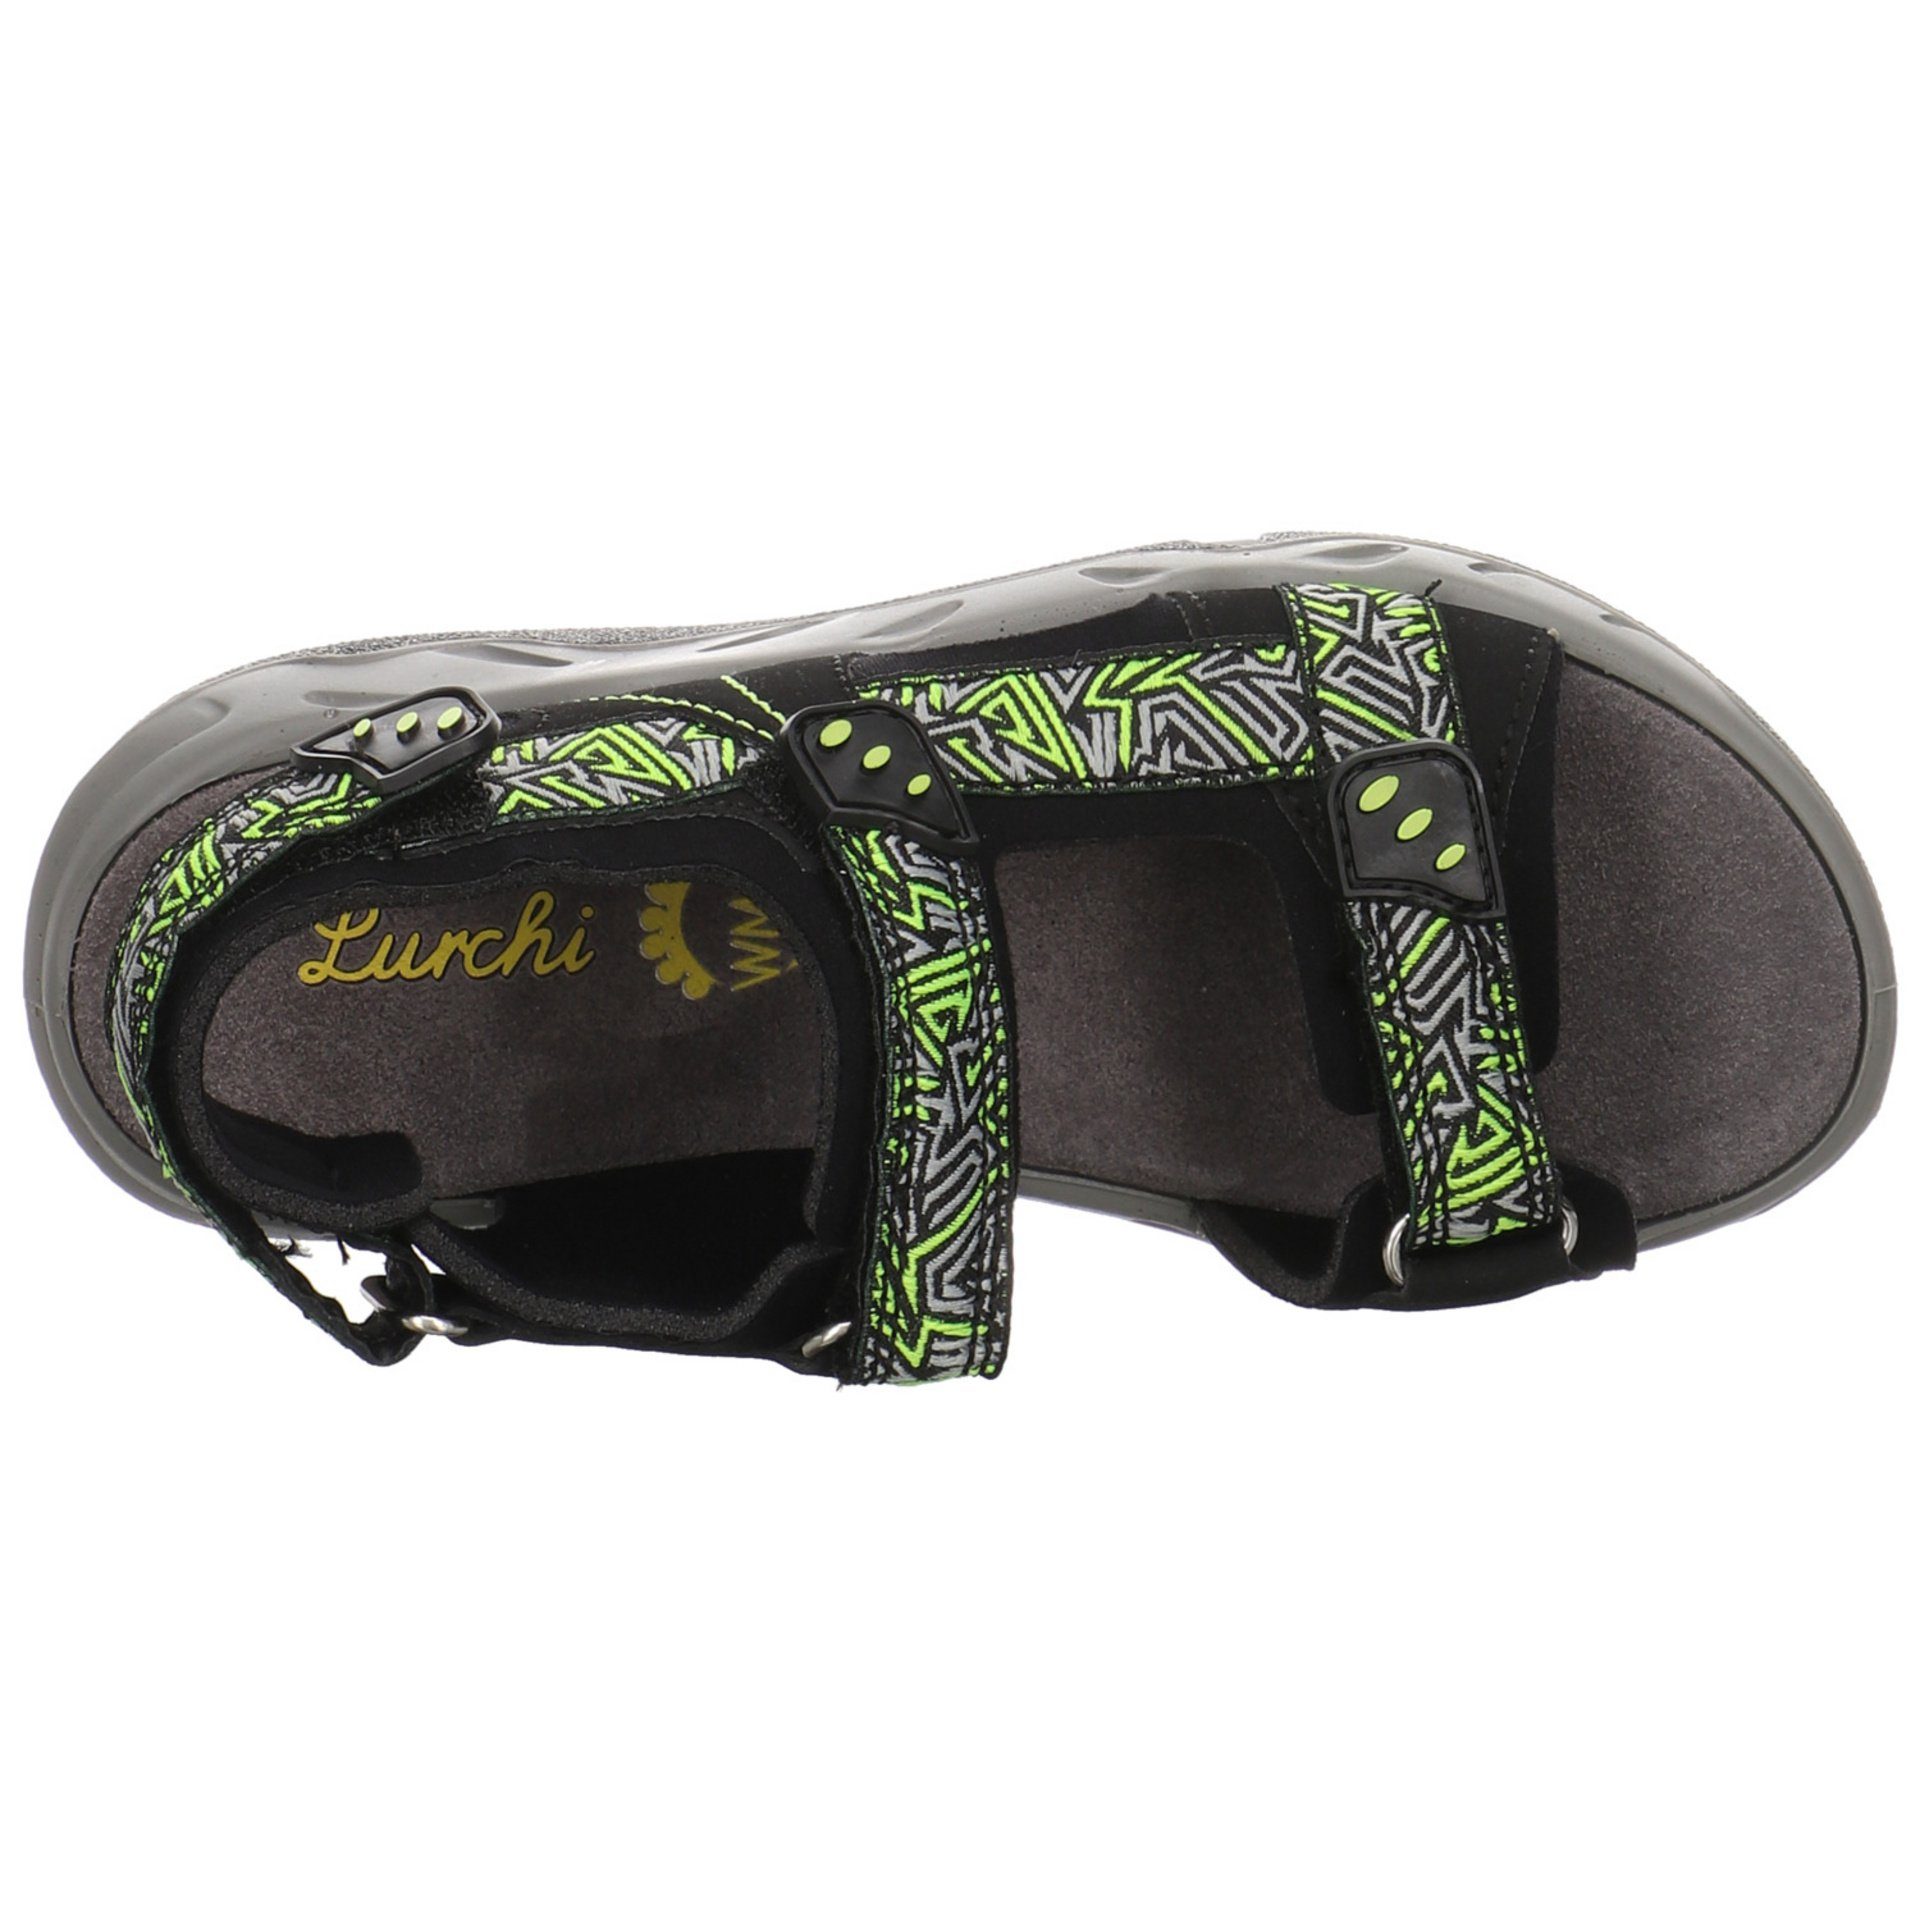 Synthetikkombination Sandalen Salamander Kinderschuhe Schuhe Black Multi Lurchi Sandale Odono Sandale Jungen